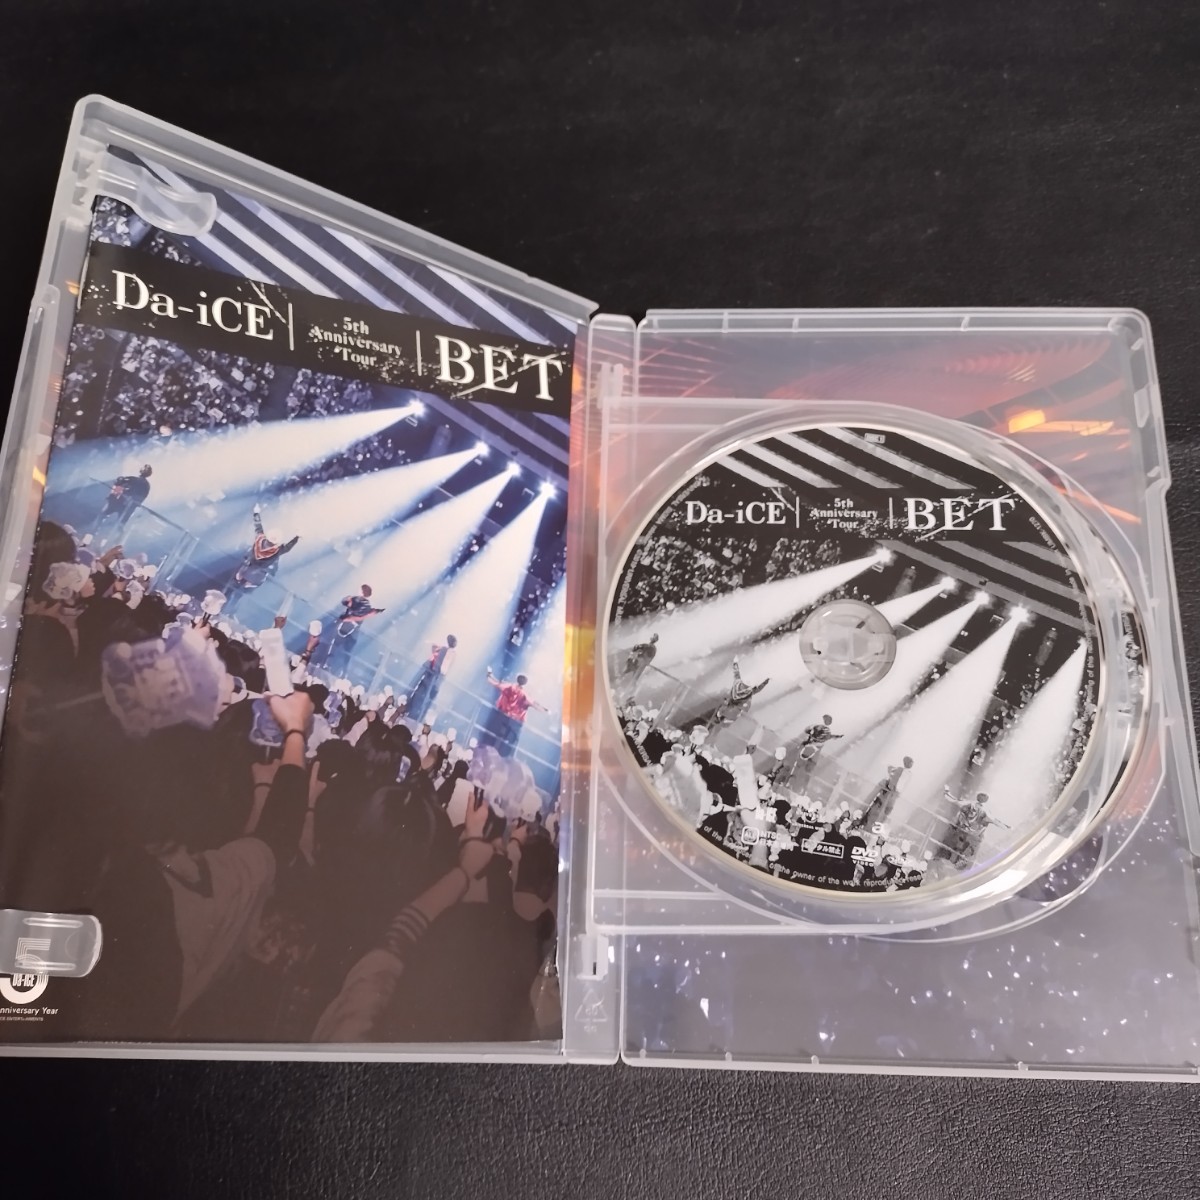 【Da-iCE】ダイス Da-iCE 5th Anniversary Tour-BET- 邦楽DVD 2枚組 2019年_画像3